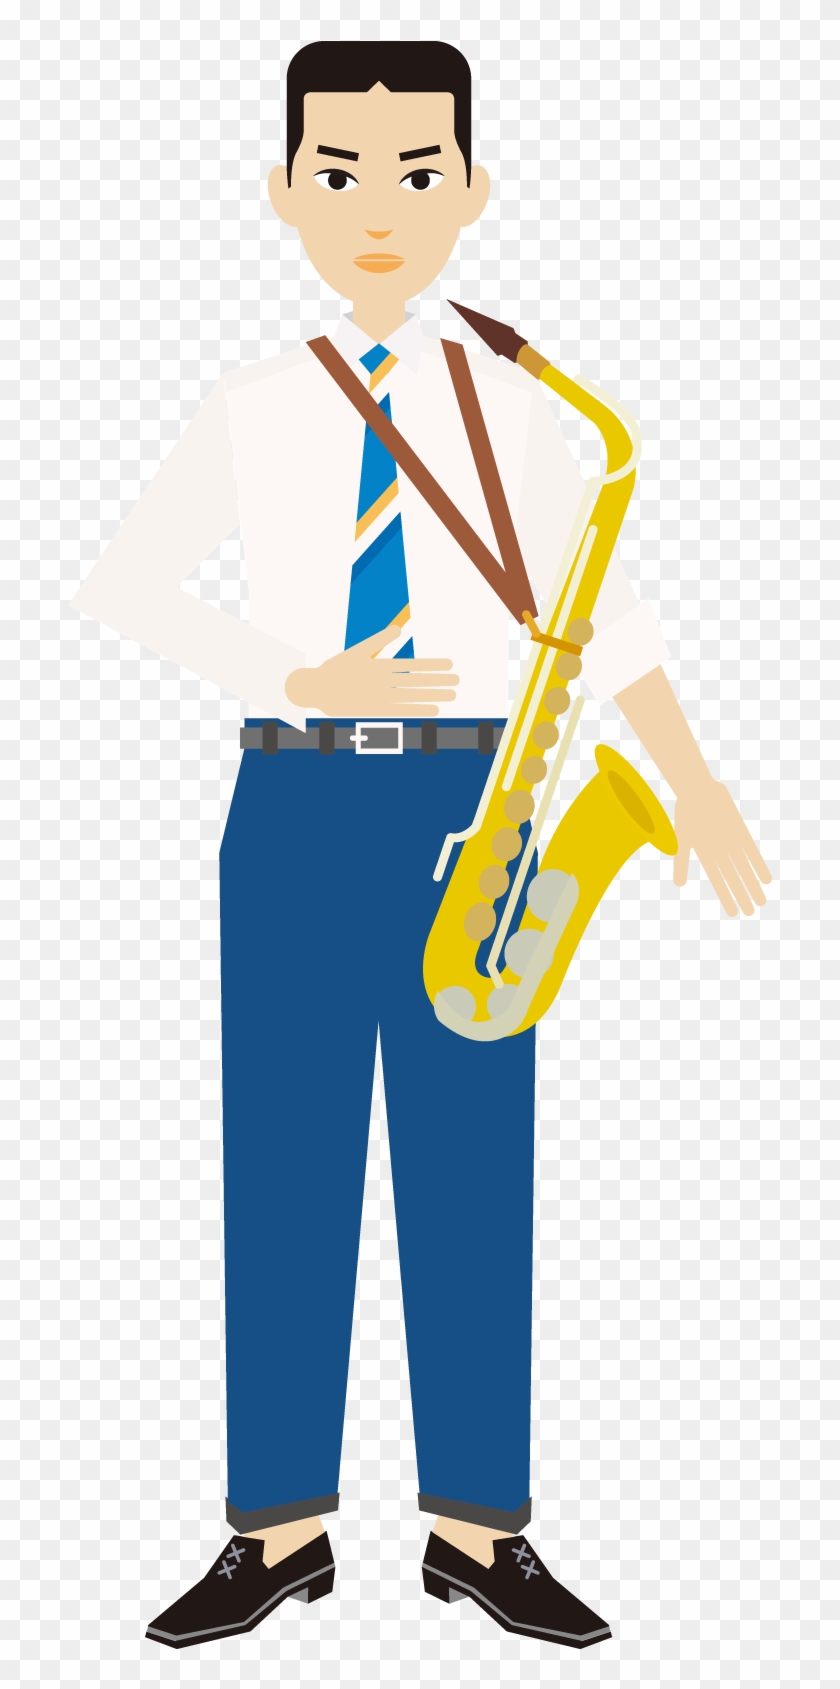 Trumpet Man 1758*1870 Transprent Png Free Download - Trumpet Man 1758*1870 Transprent Png Free Download #361214